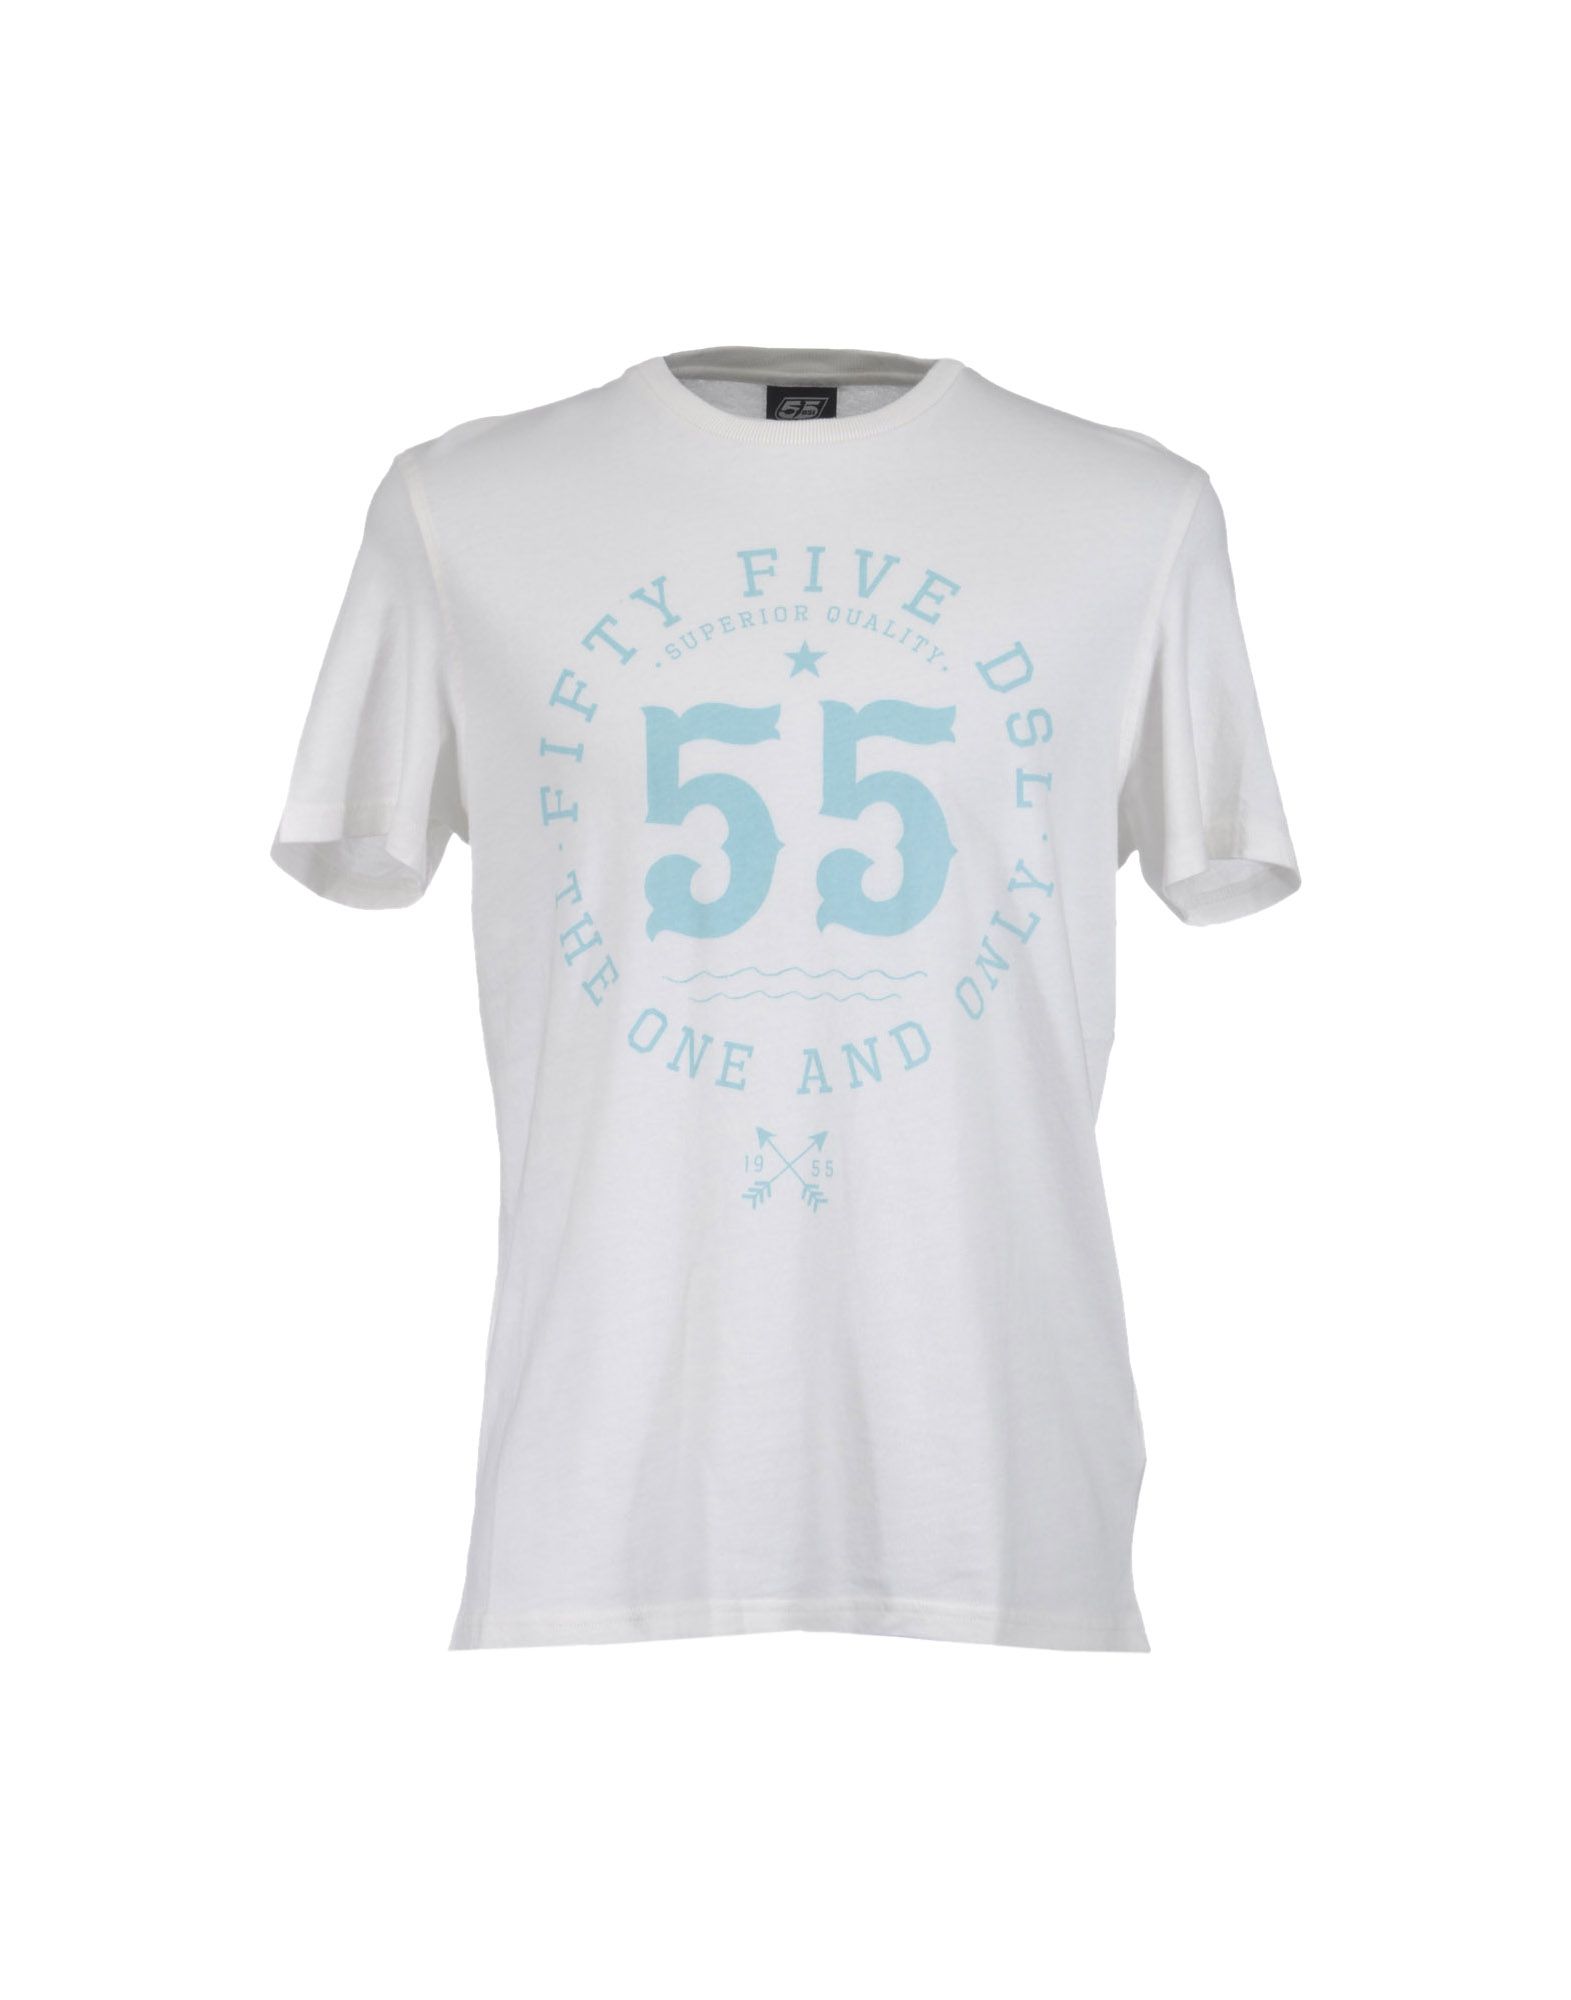 Foto 55dsl camisetas de manga corta
